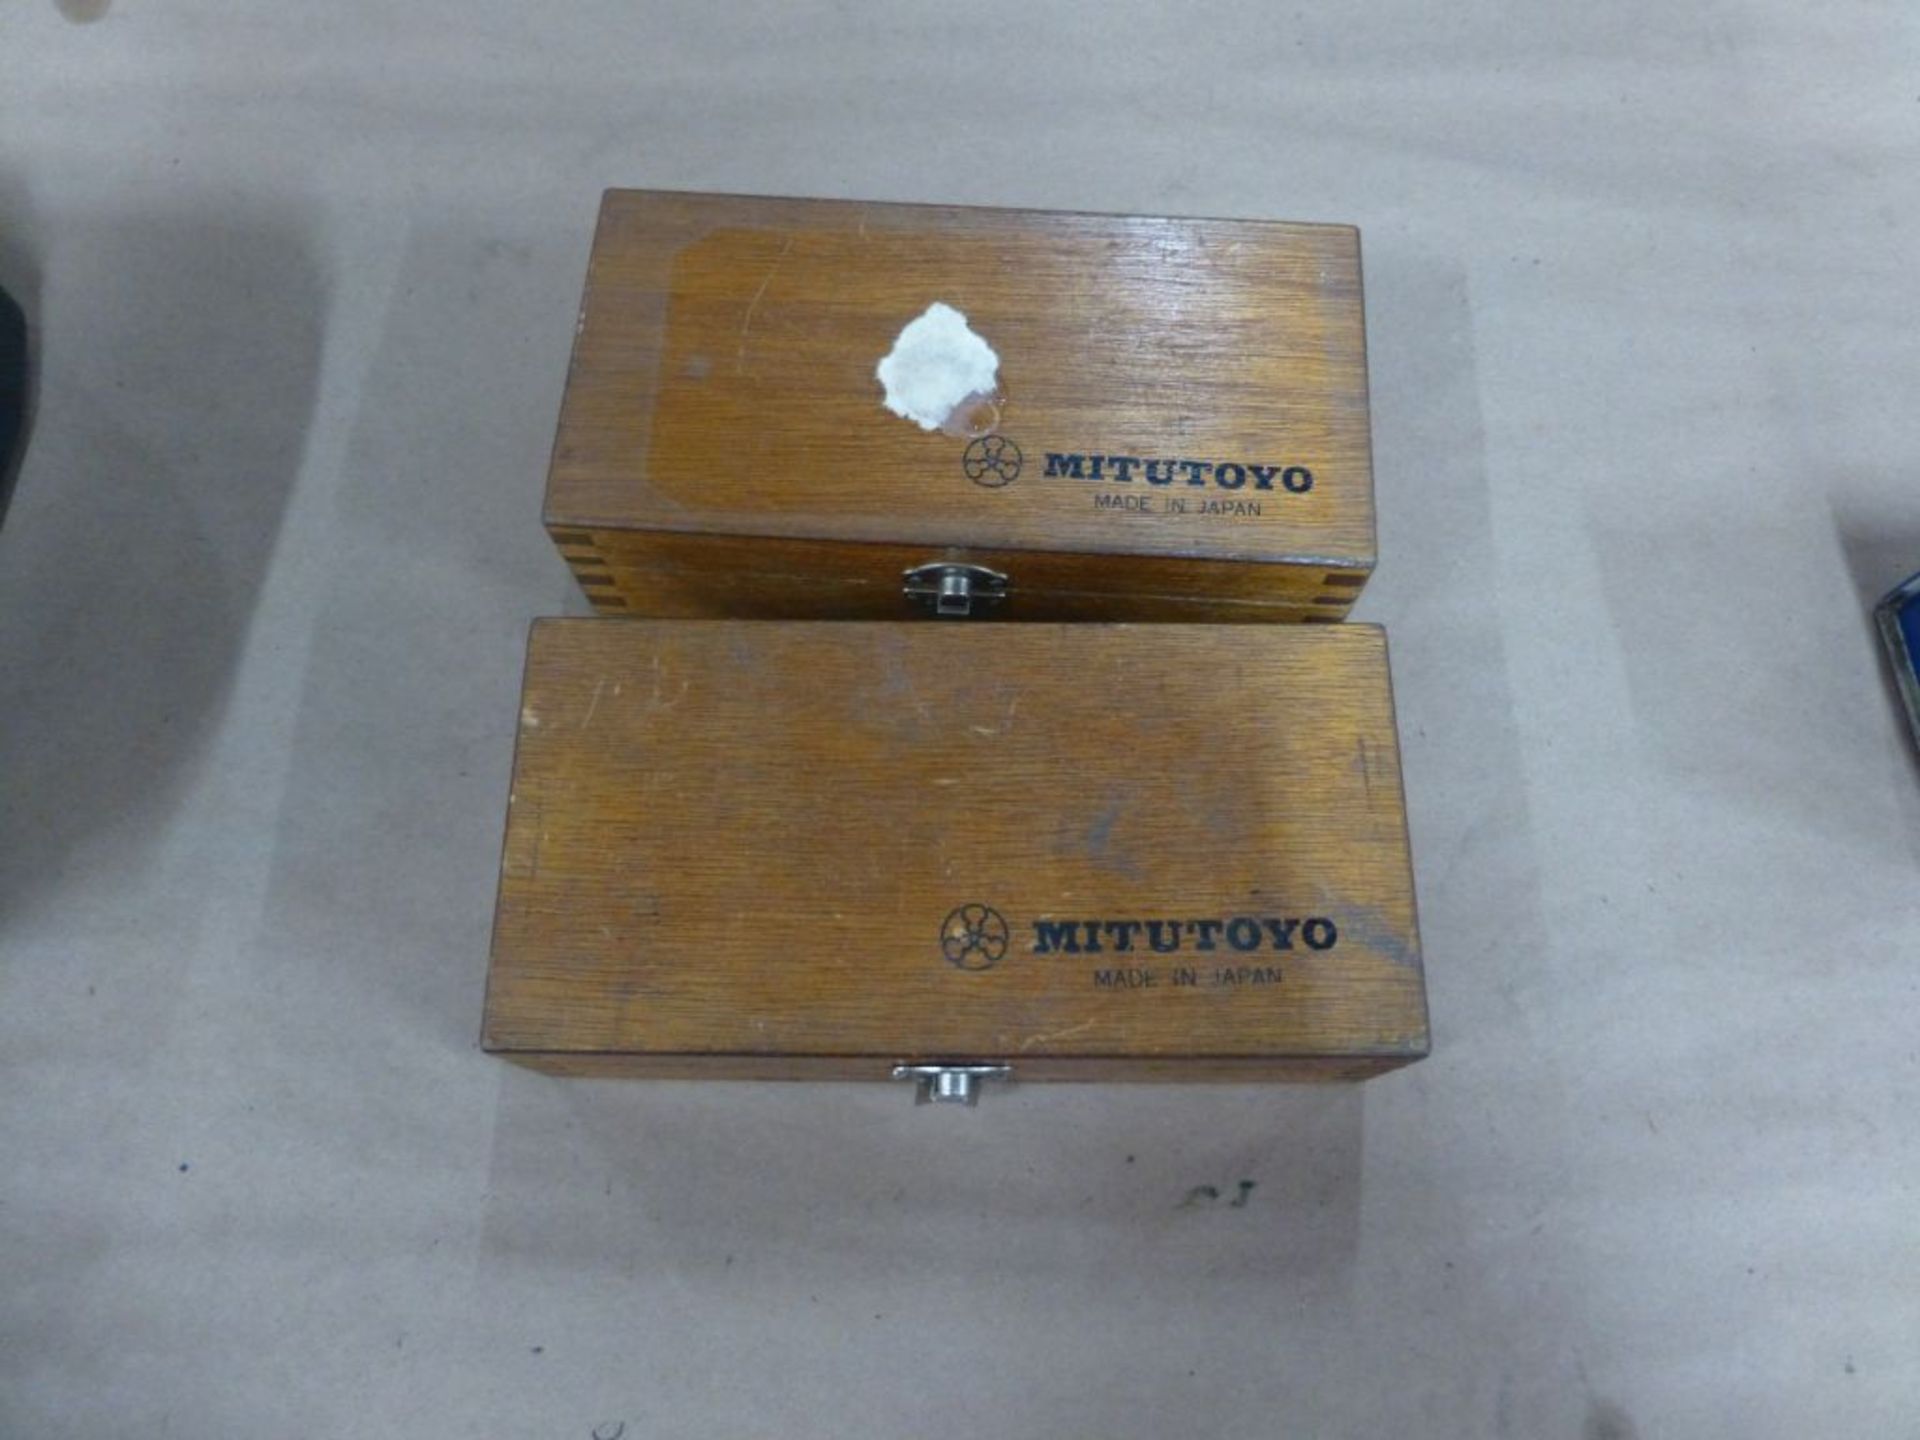 Lot of (2) Mitutoyo Digital Micrometer Stops - Image 4 of 4